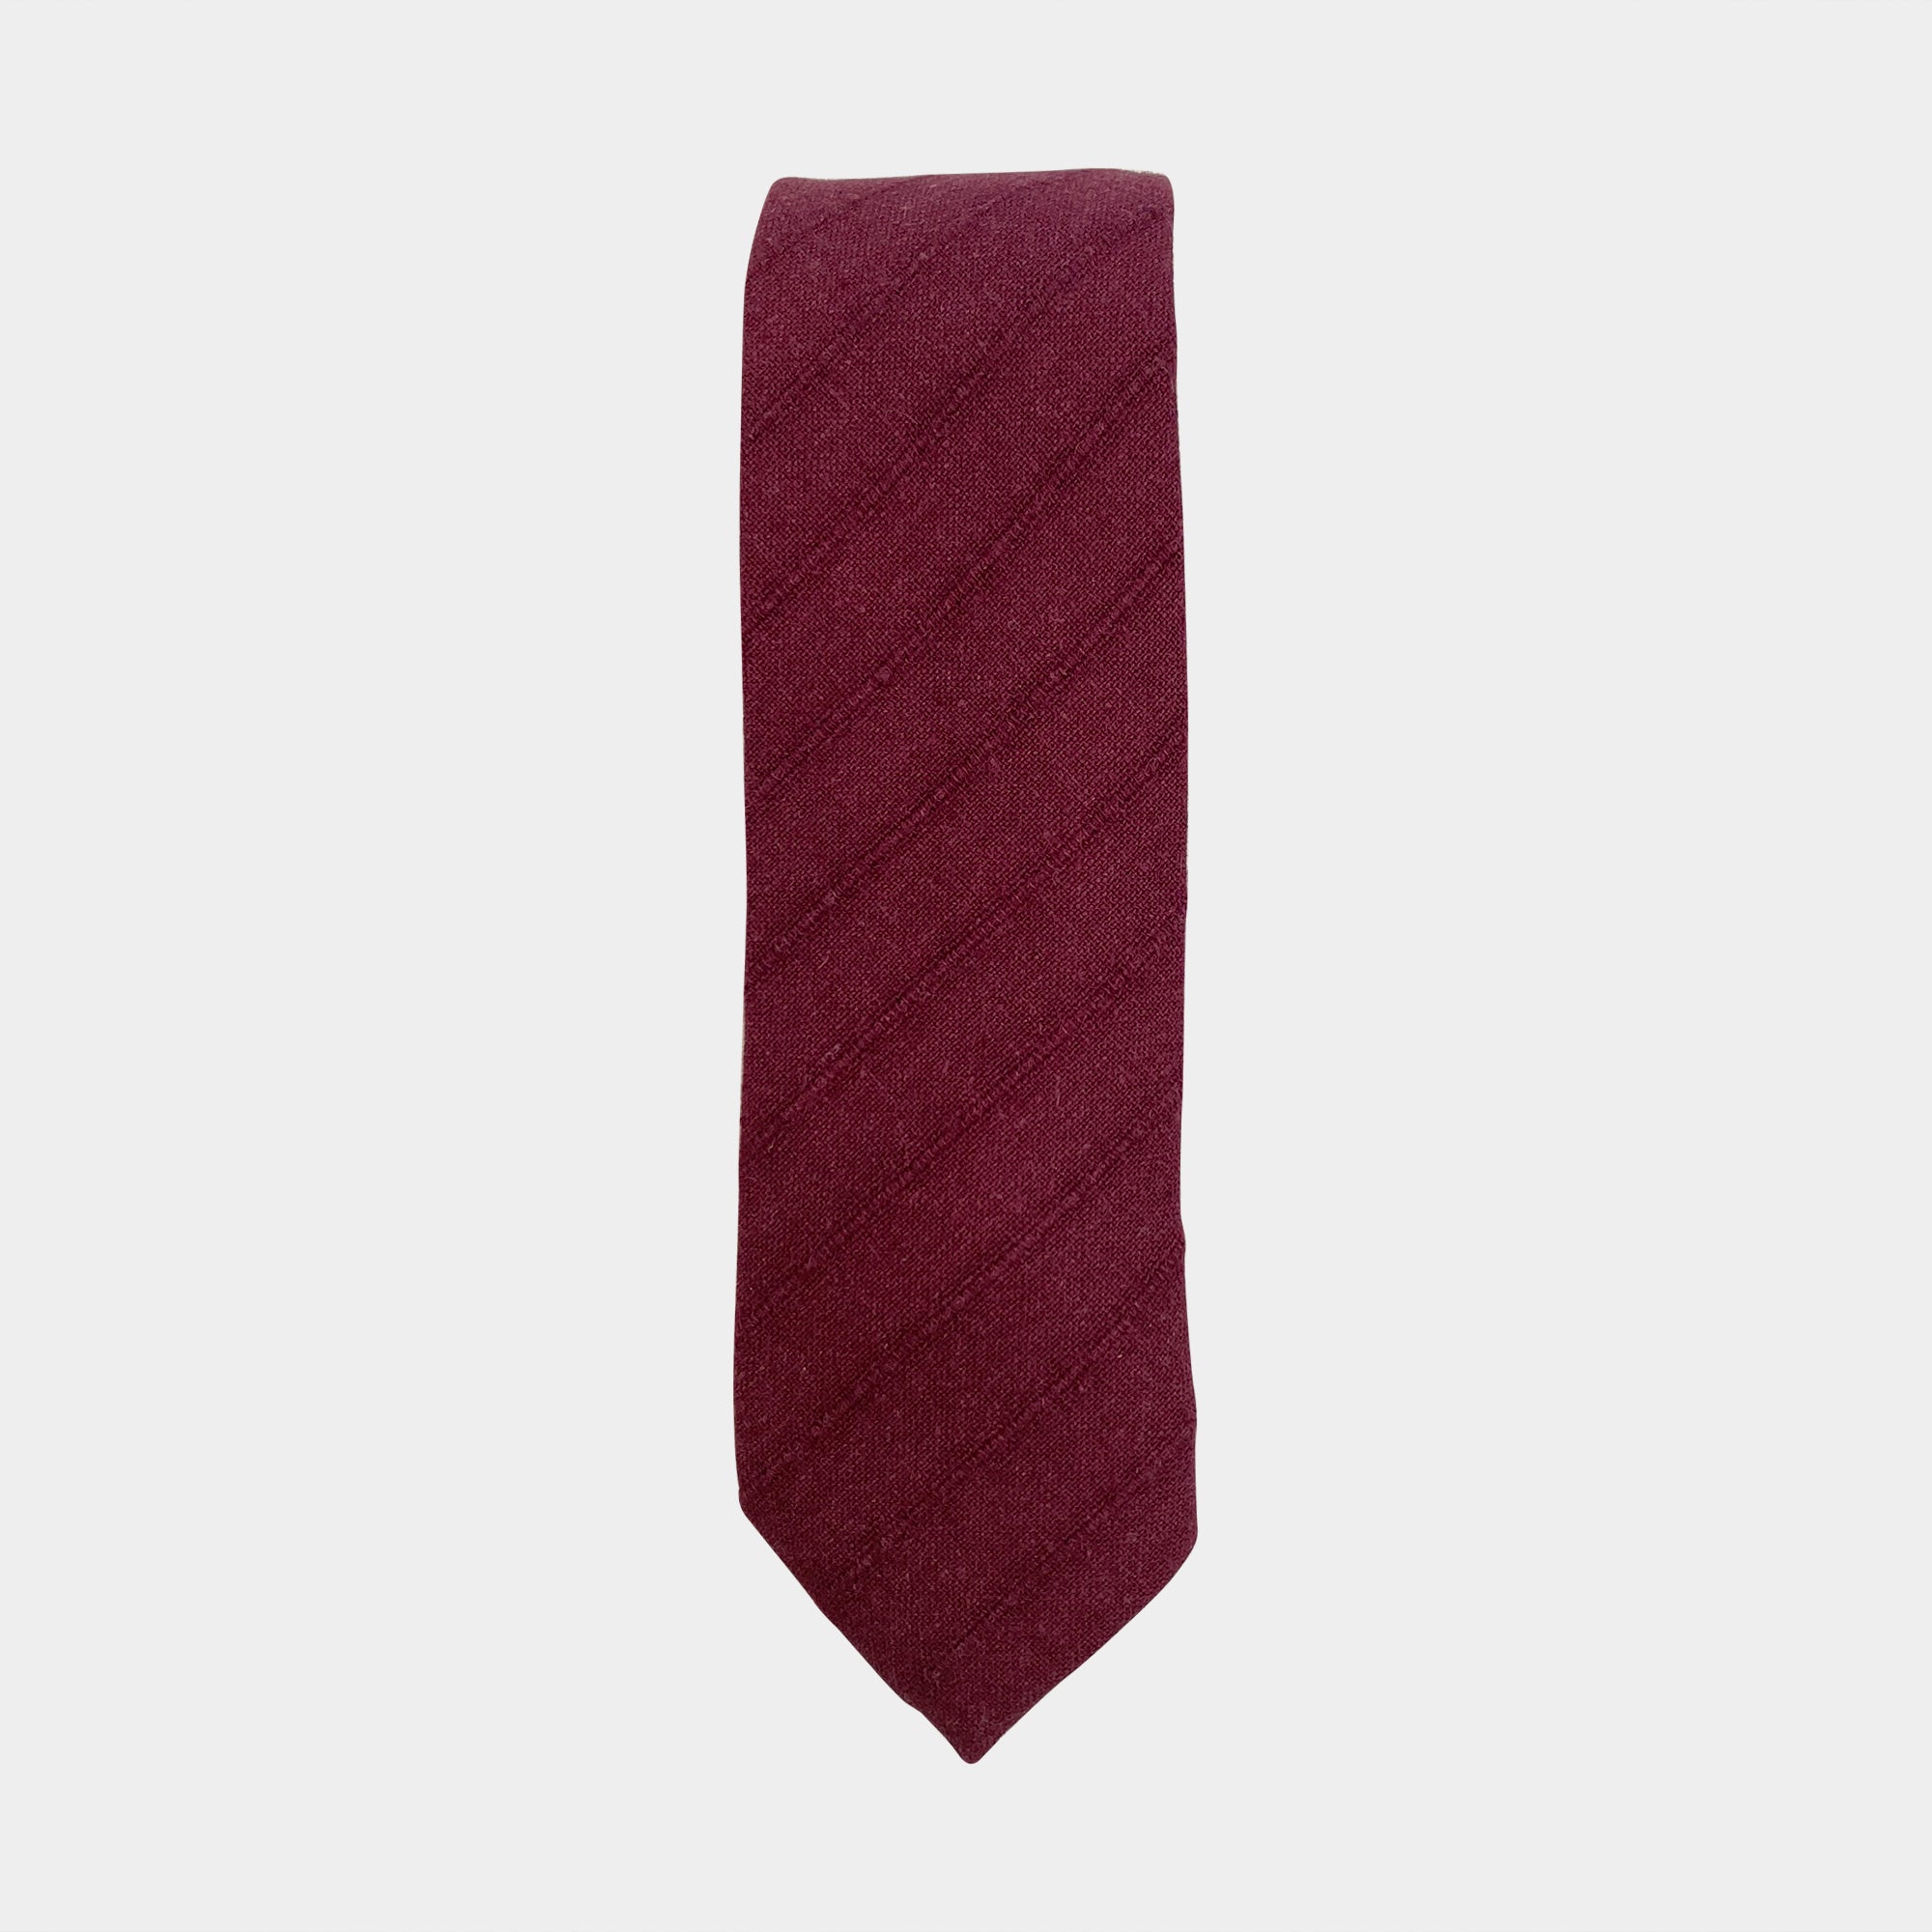 EASTON - Men's Tie